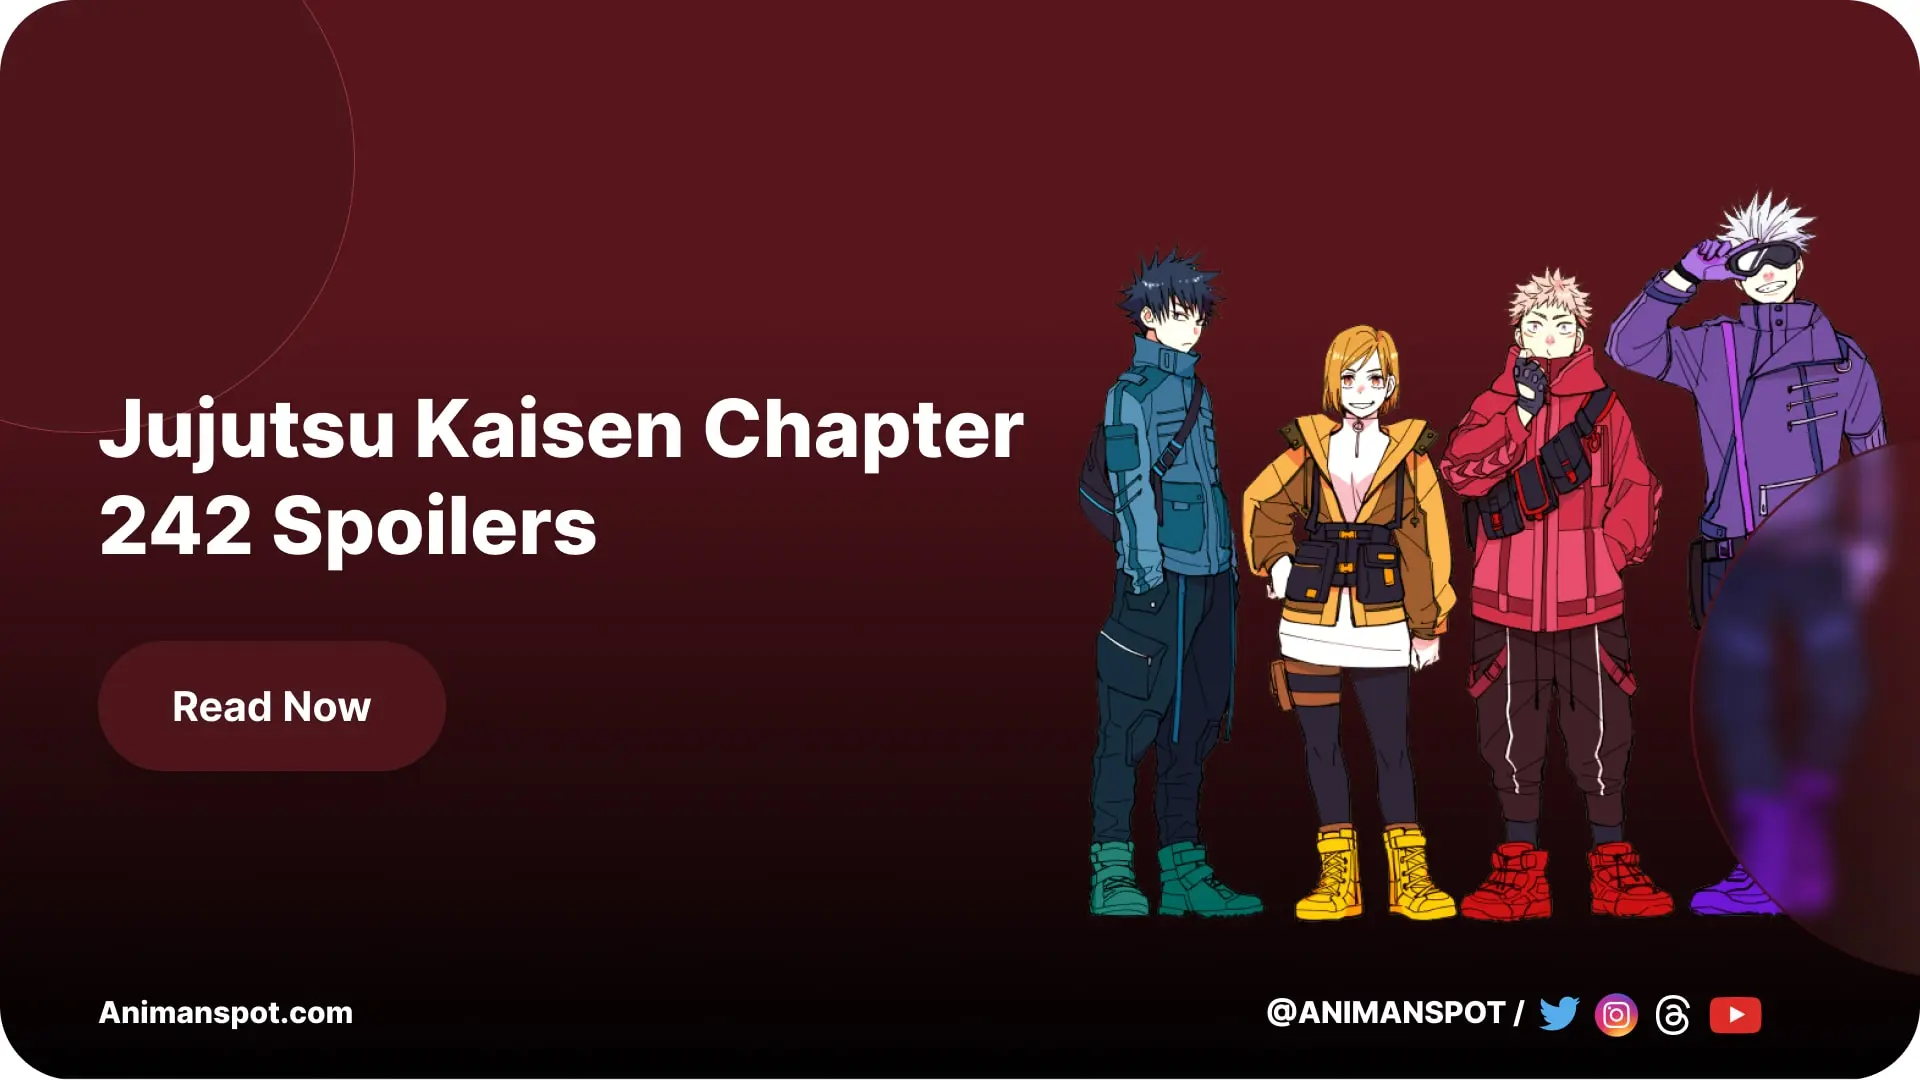 Jujutsu Kaisen Celebrates the Anime with Hilarious Special Chapter